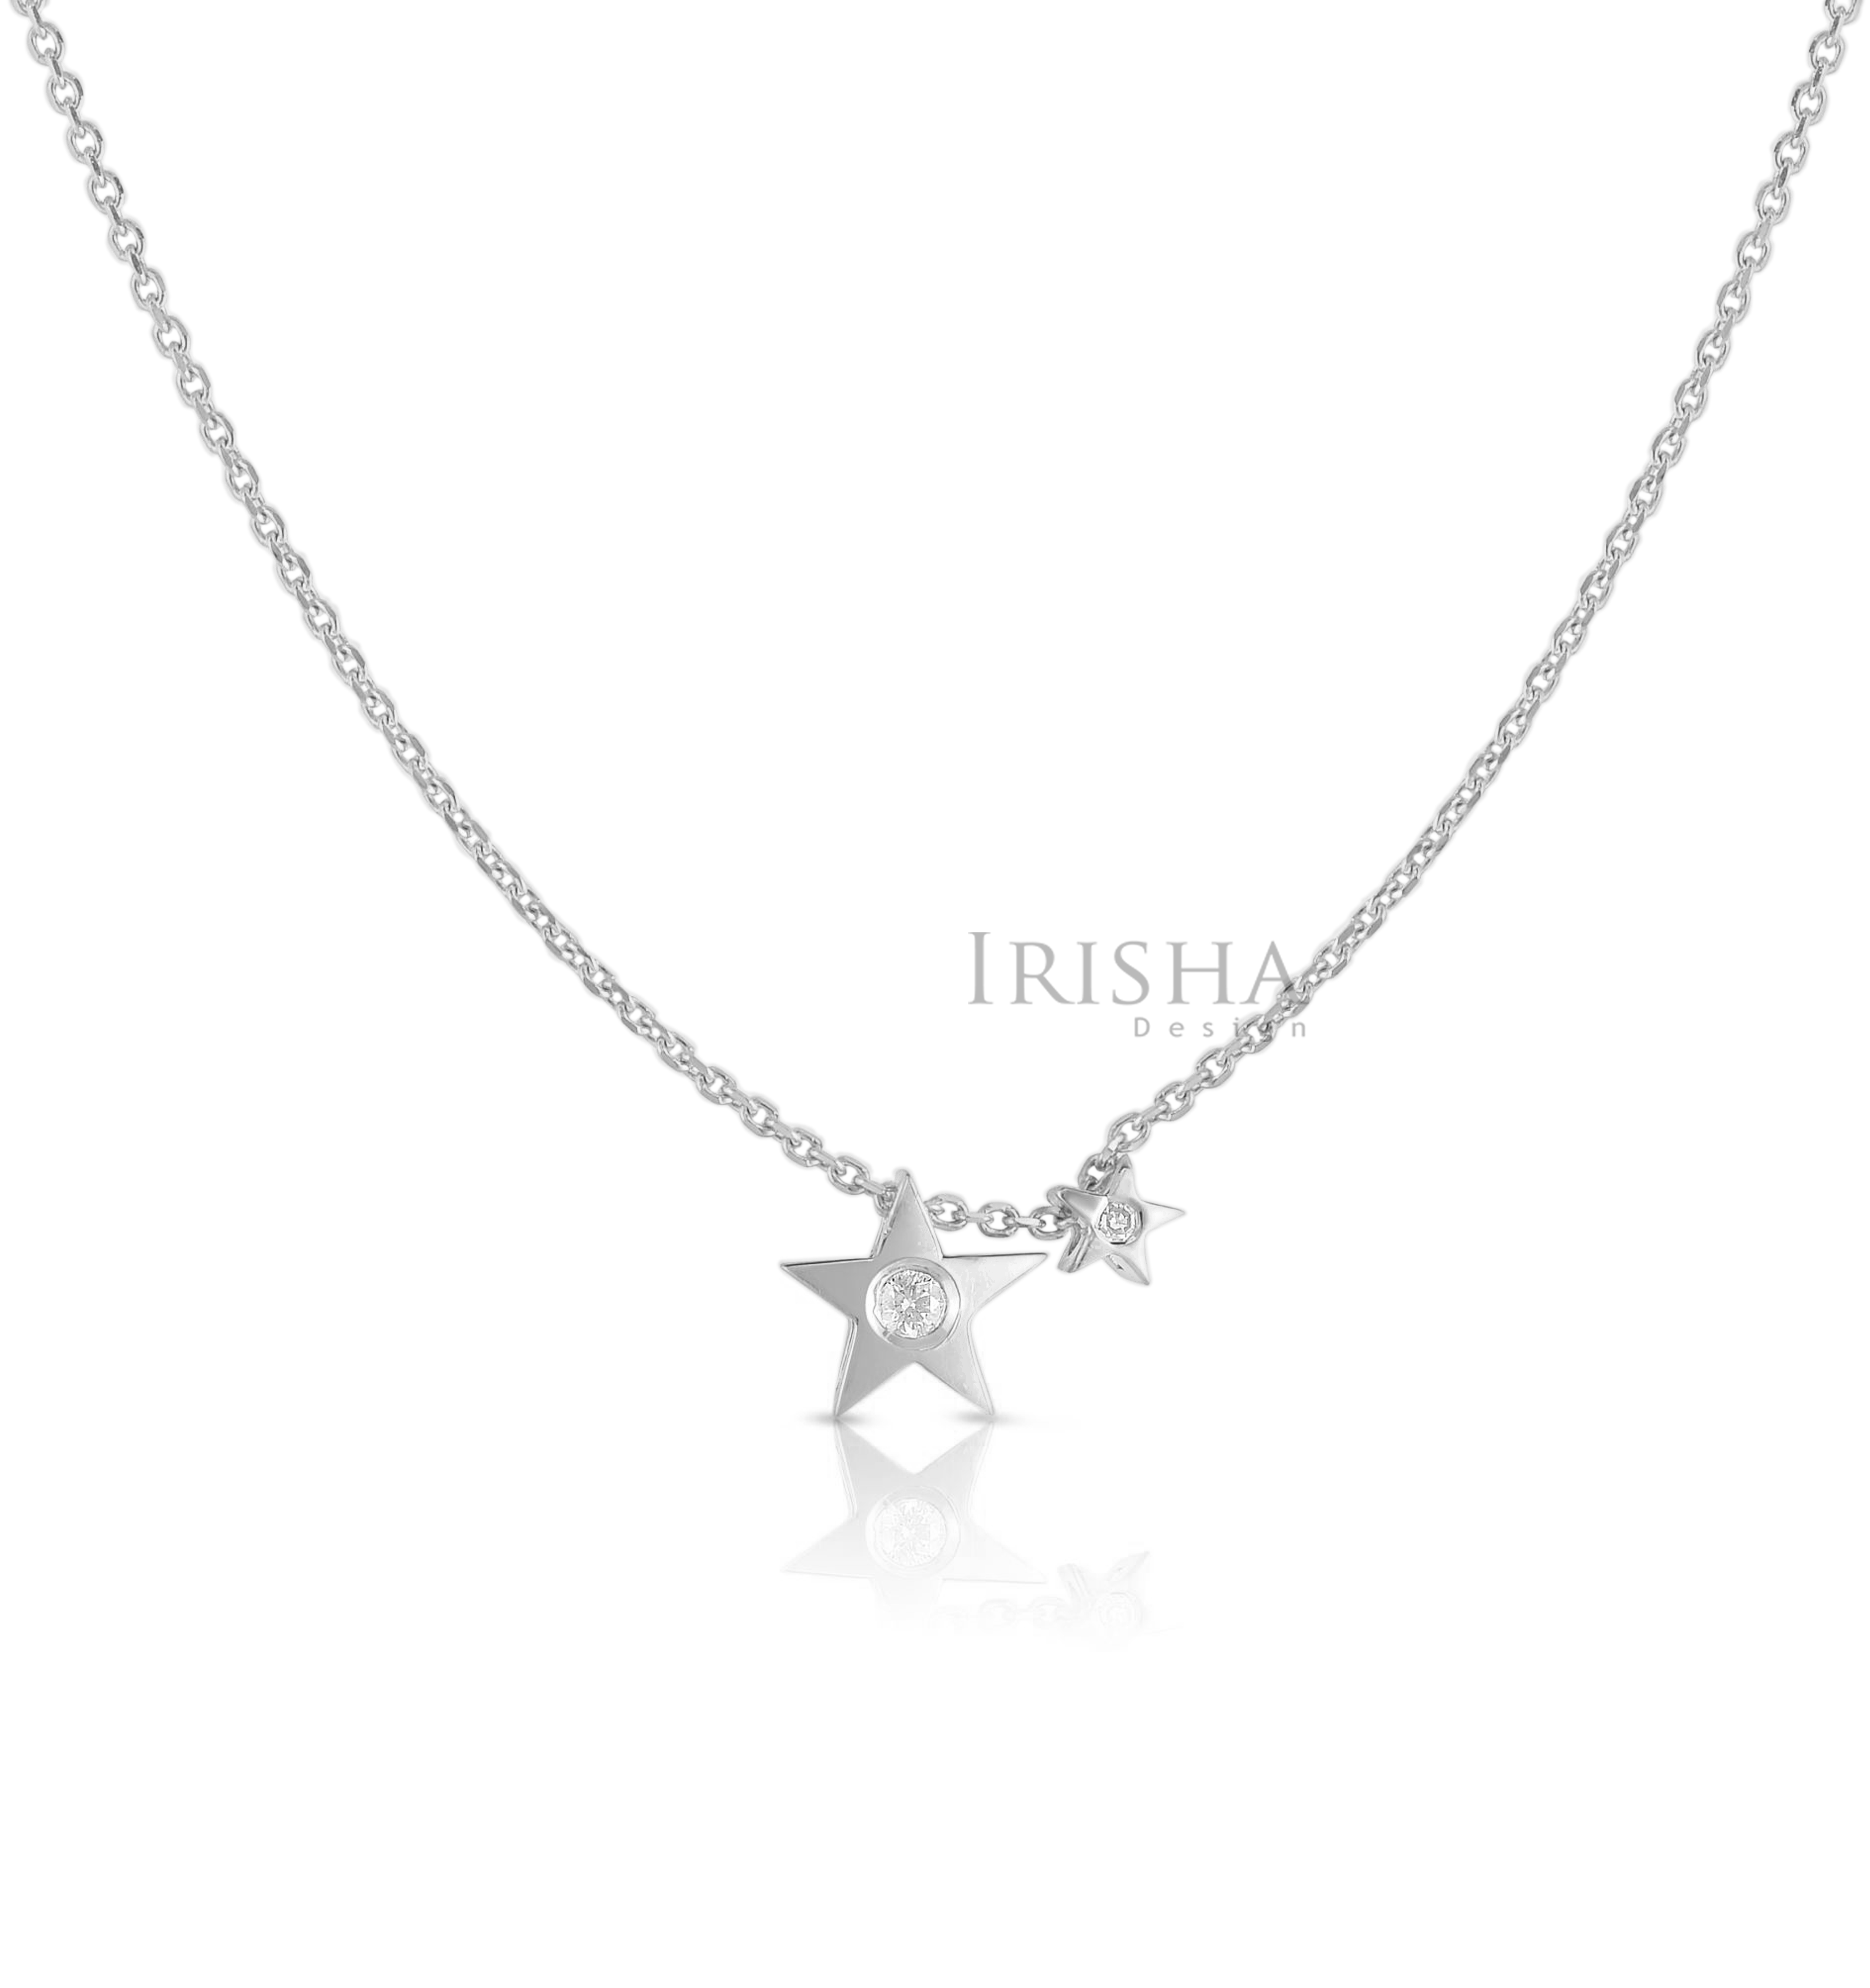 14K Gold 0.04 Ct. Genuine Diamond Double Star Necklace Christmas Fine Jewelry